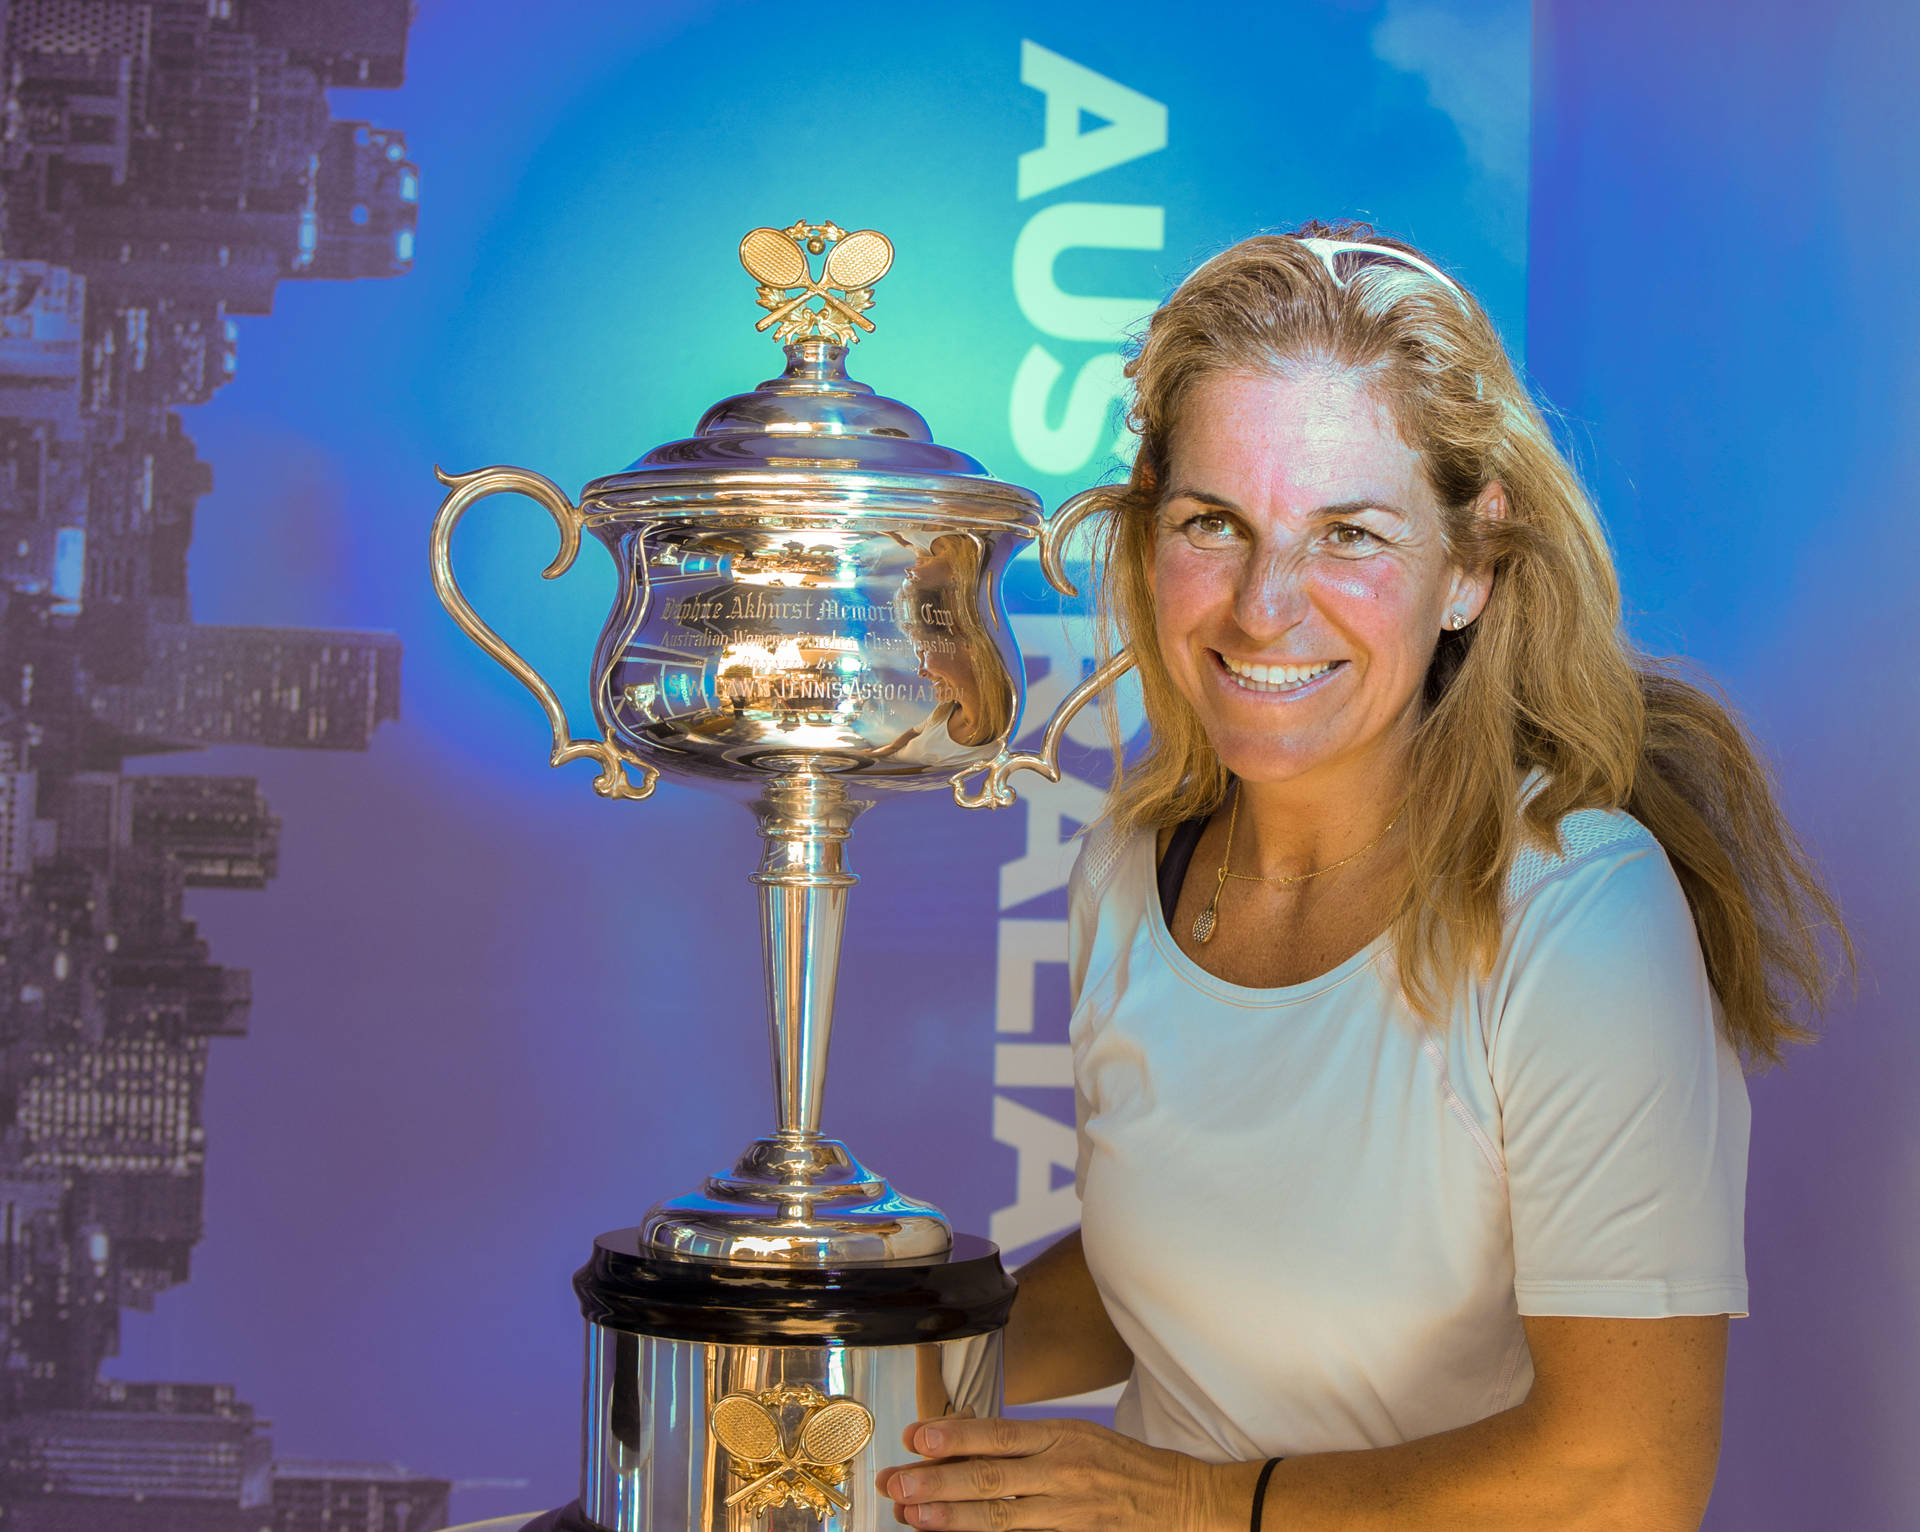 Arantxa Sánchez Vicario Trophy 2016 Australian Open Wallpaper